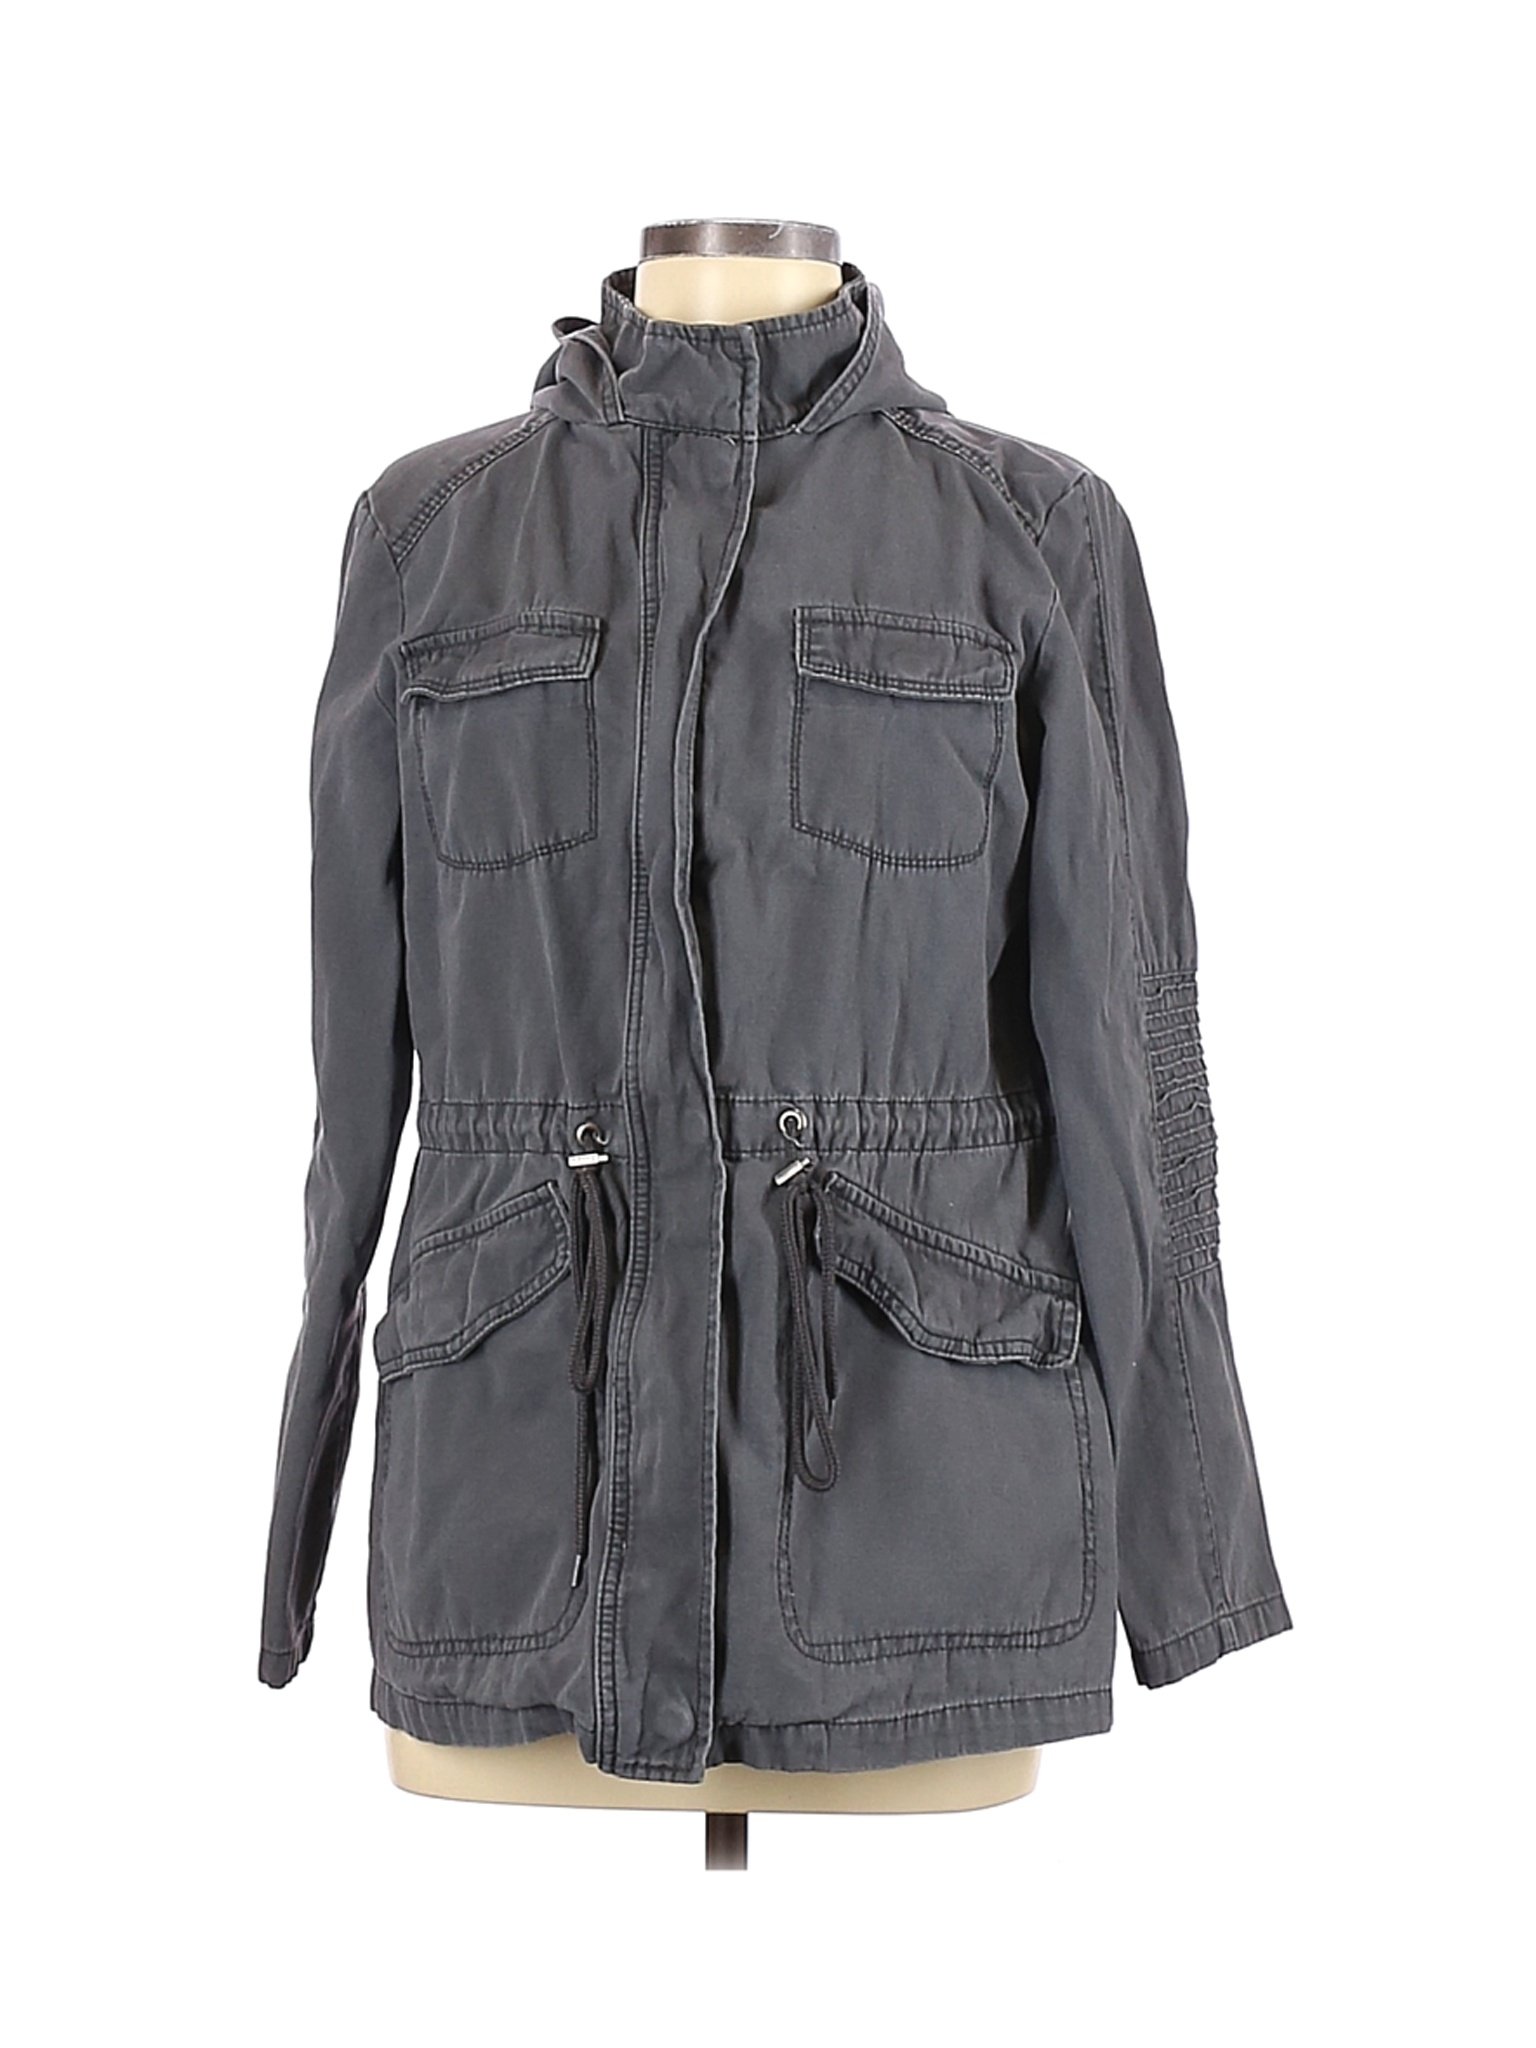 A New Day Women Gray Jacket M | eBay